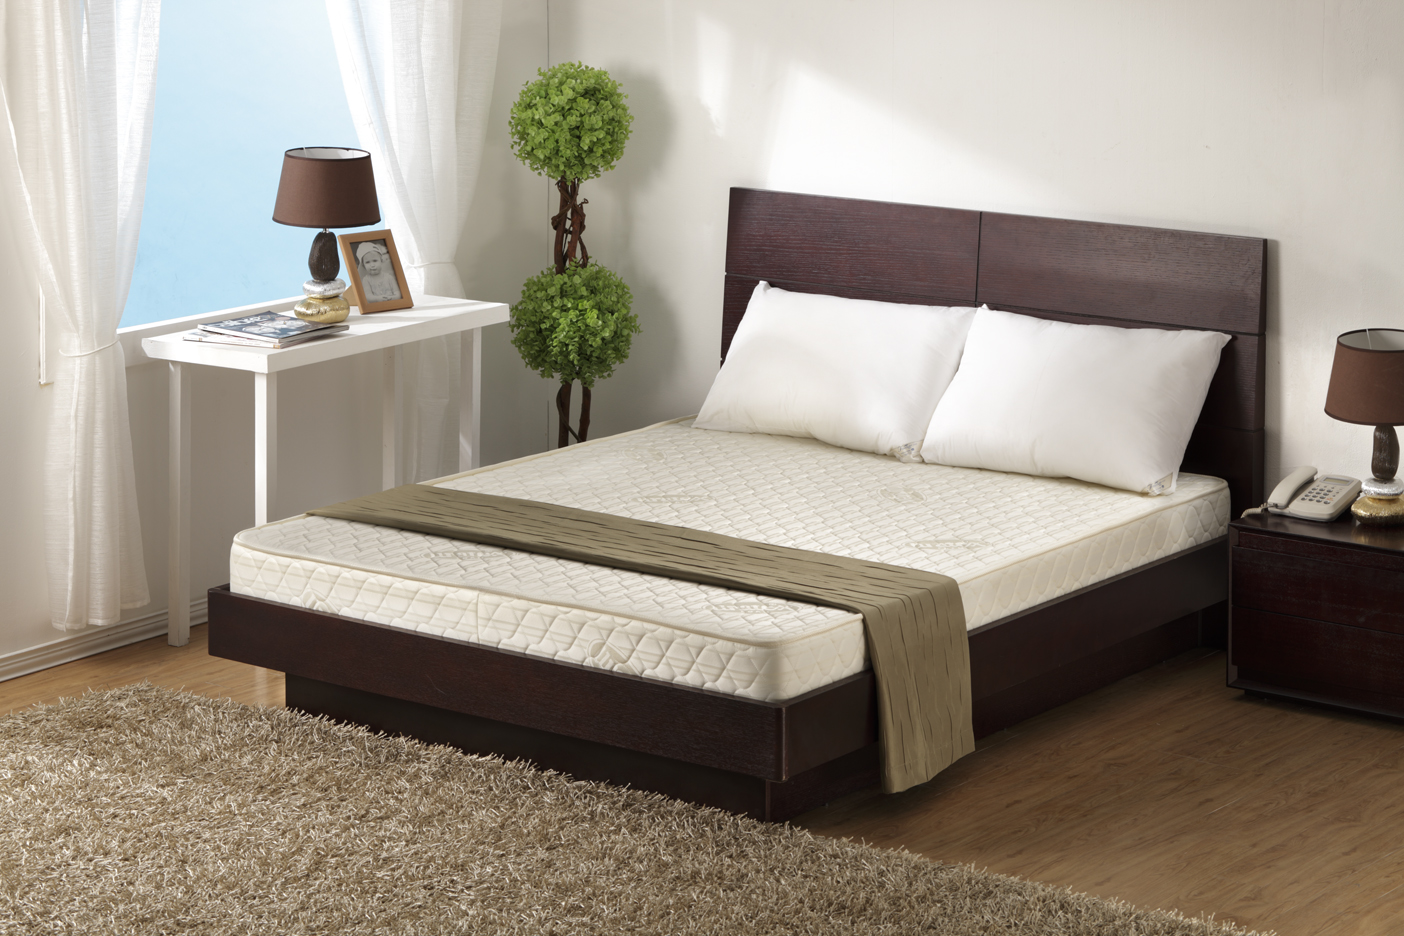 uratex bed mattress philippines